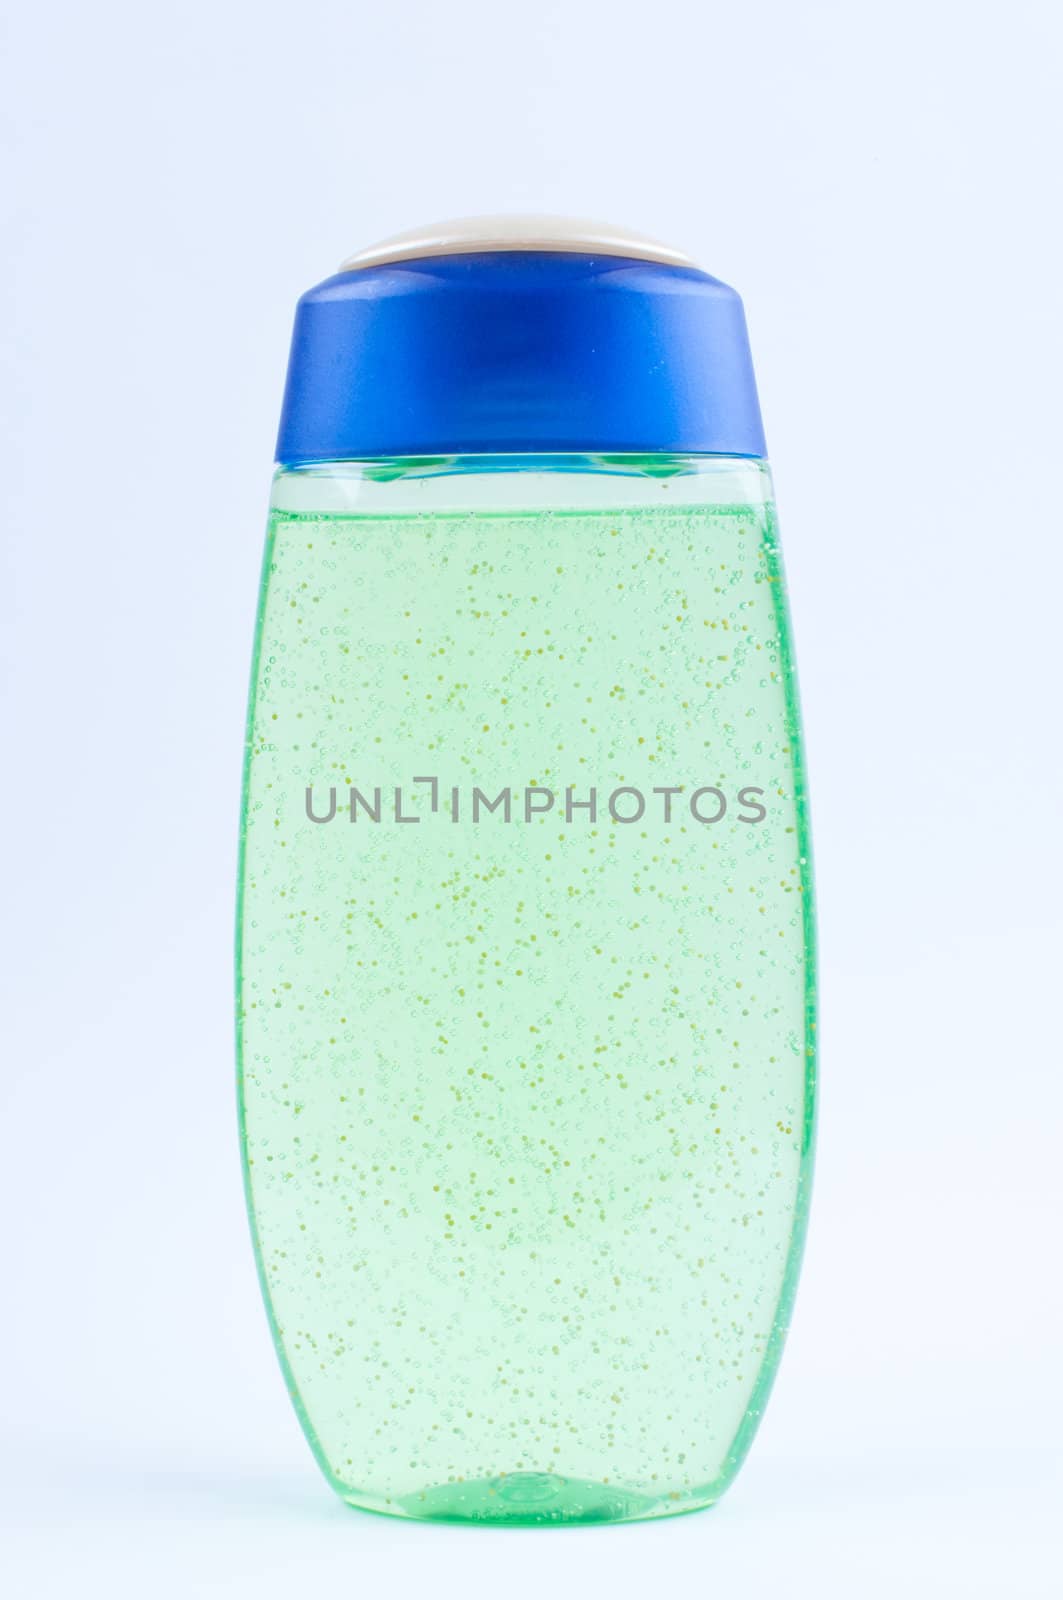 Green shower gel  in bottle on white background